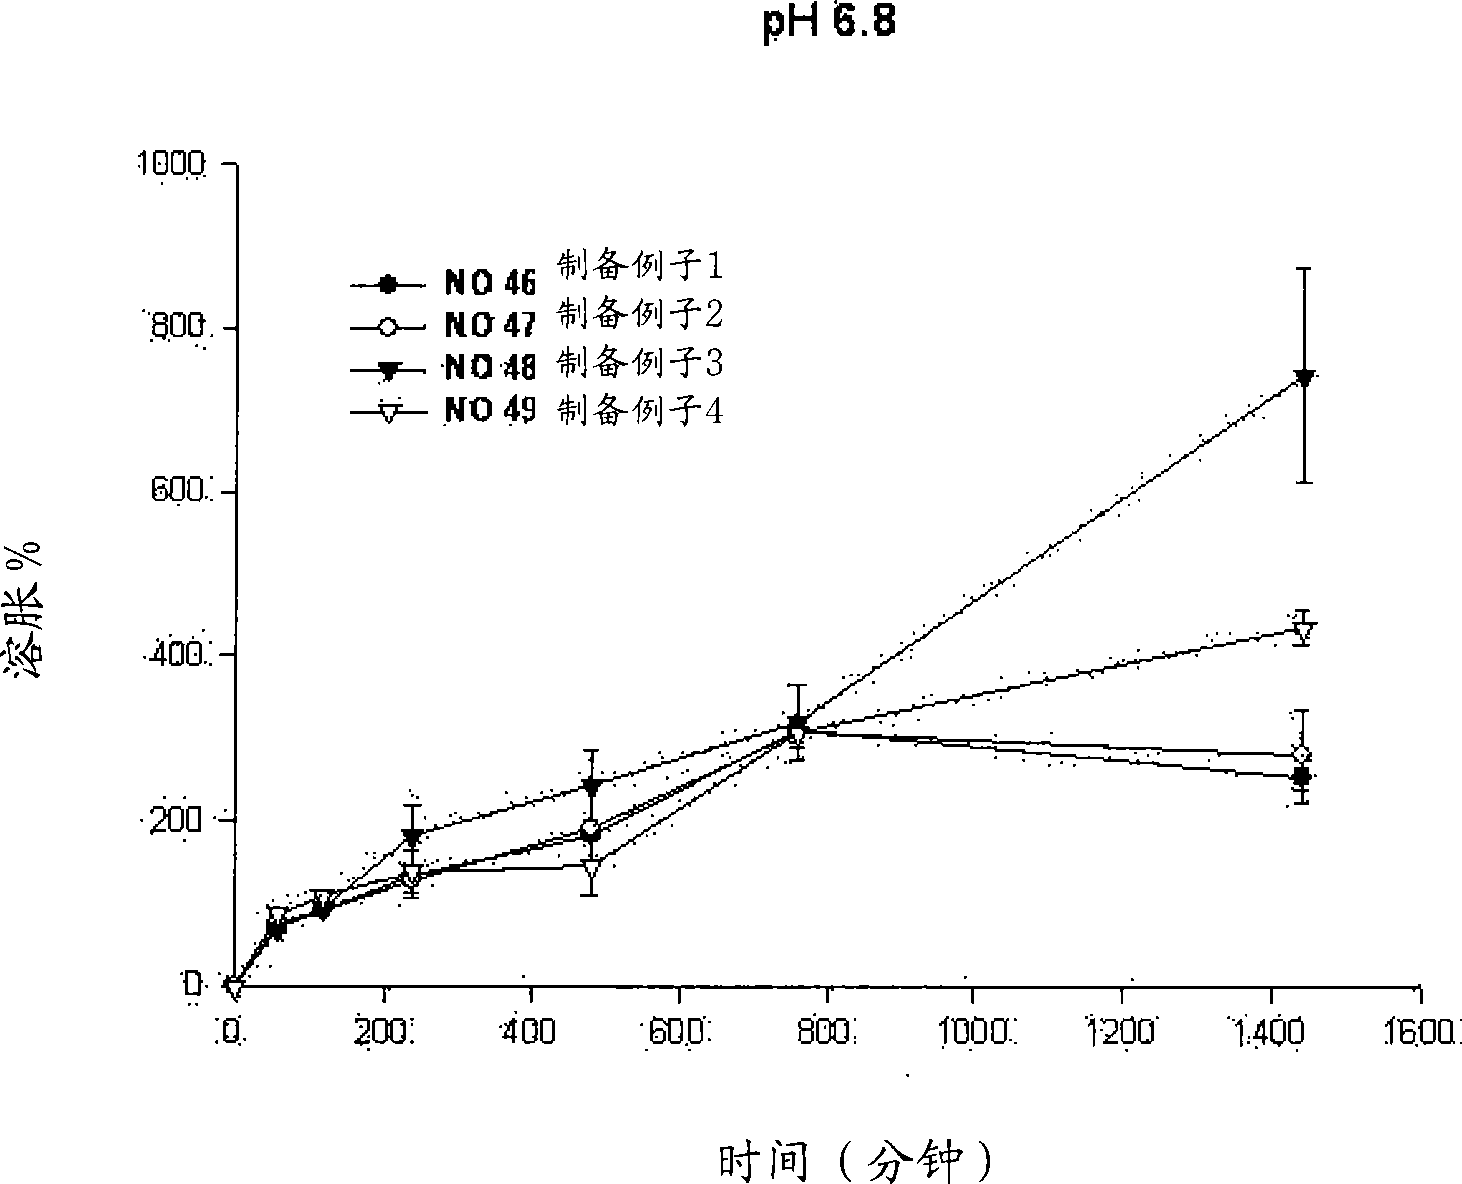 Novel controlled release-niacin formulation